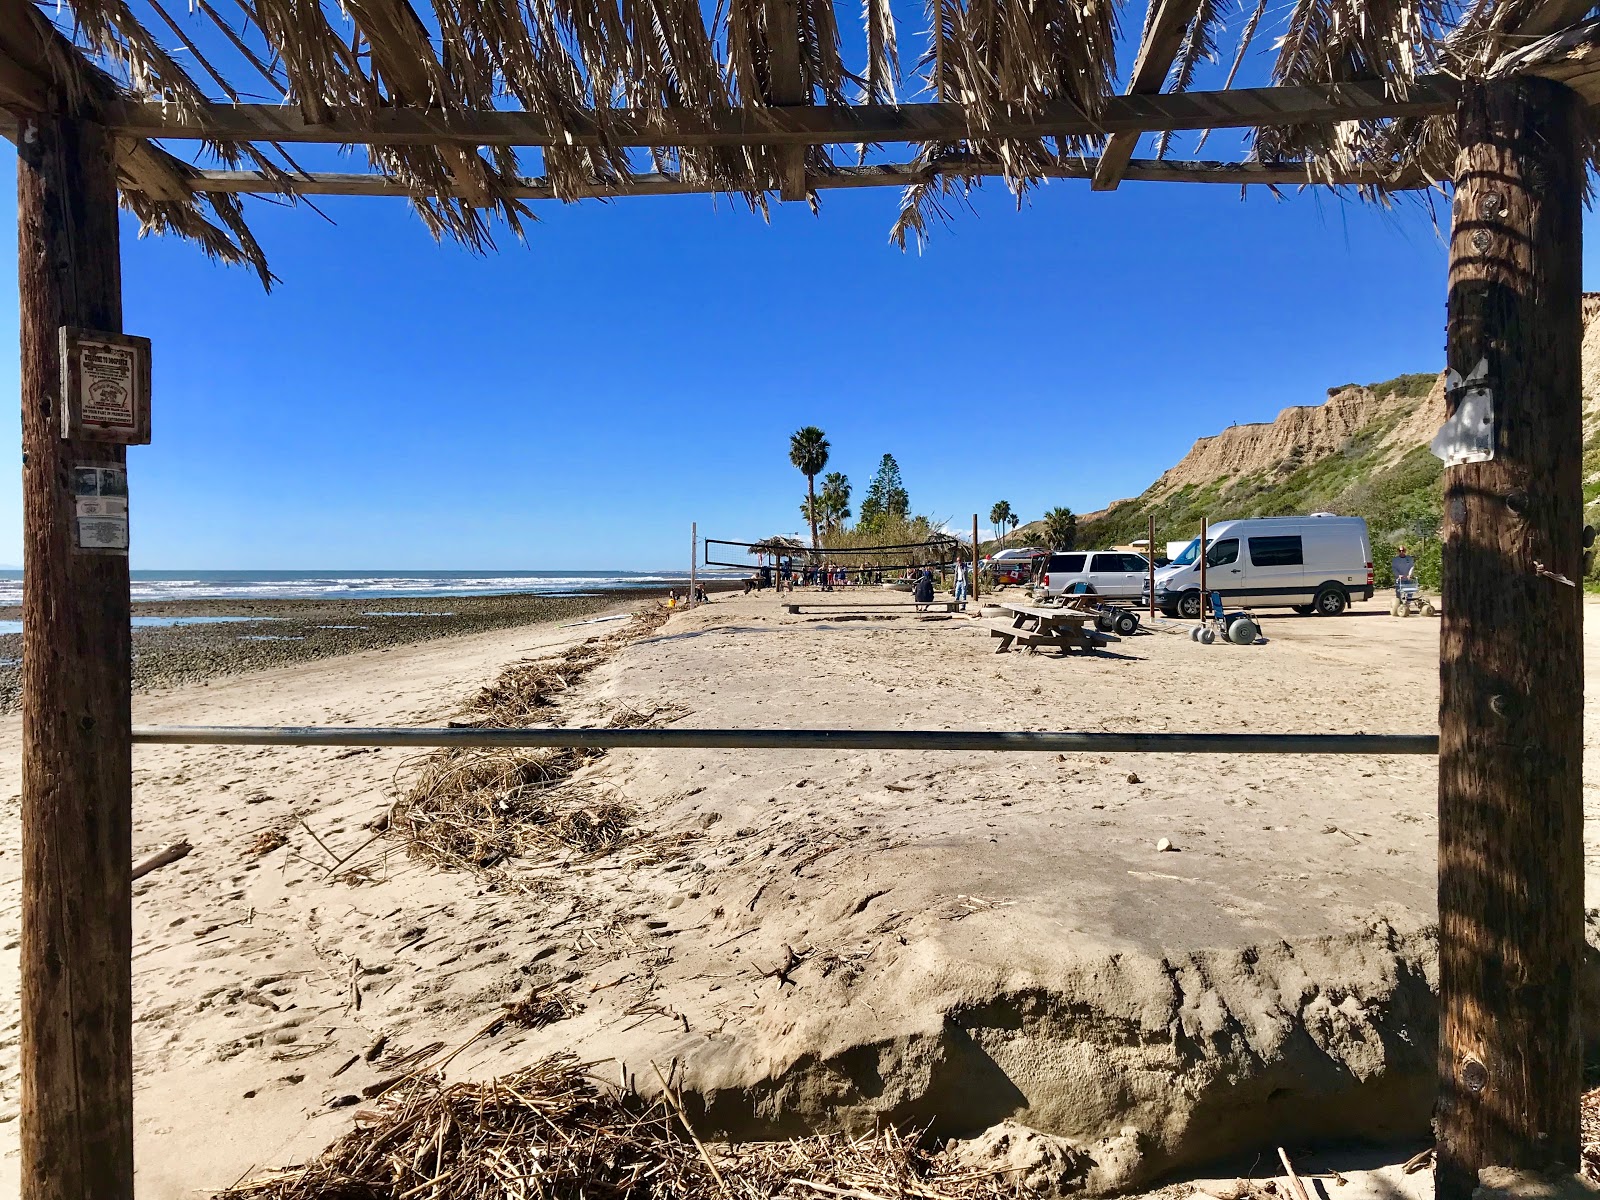 Foto av San Onofre beach med hög nivå av renlighet